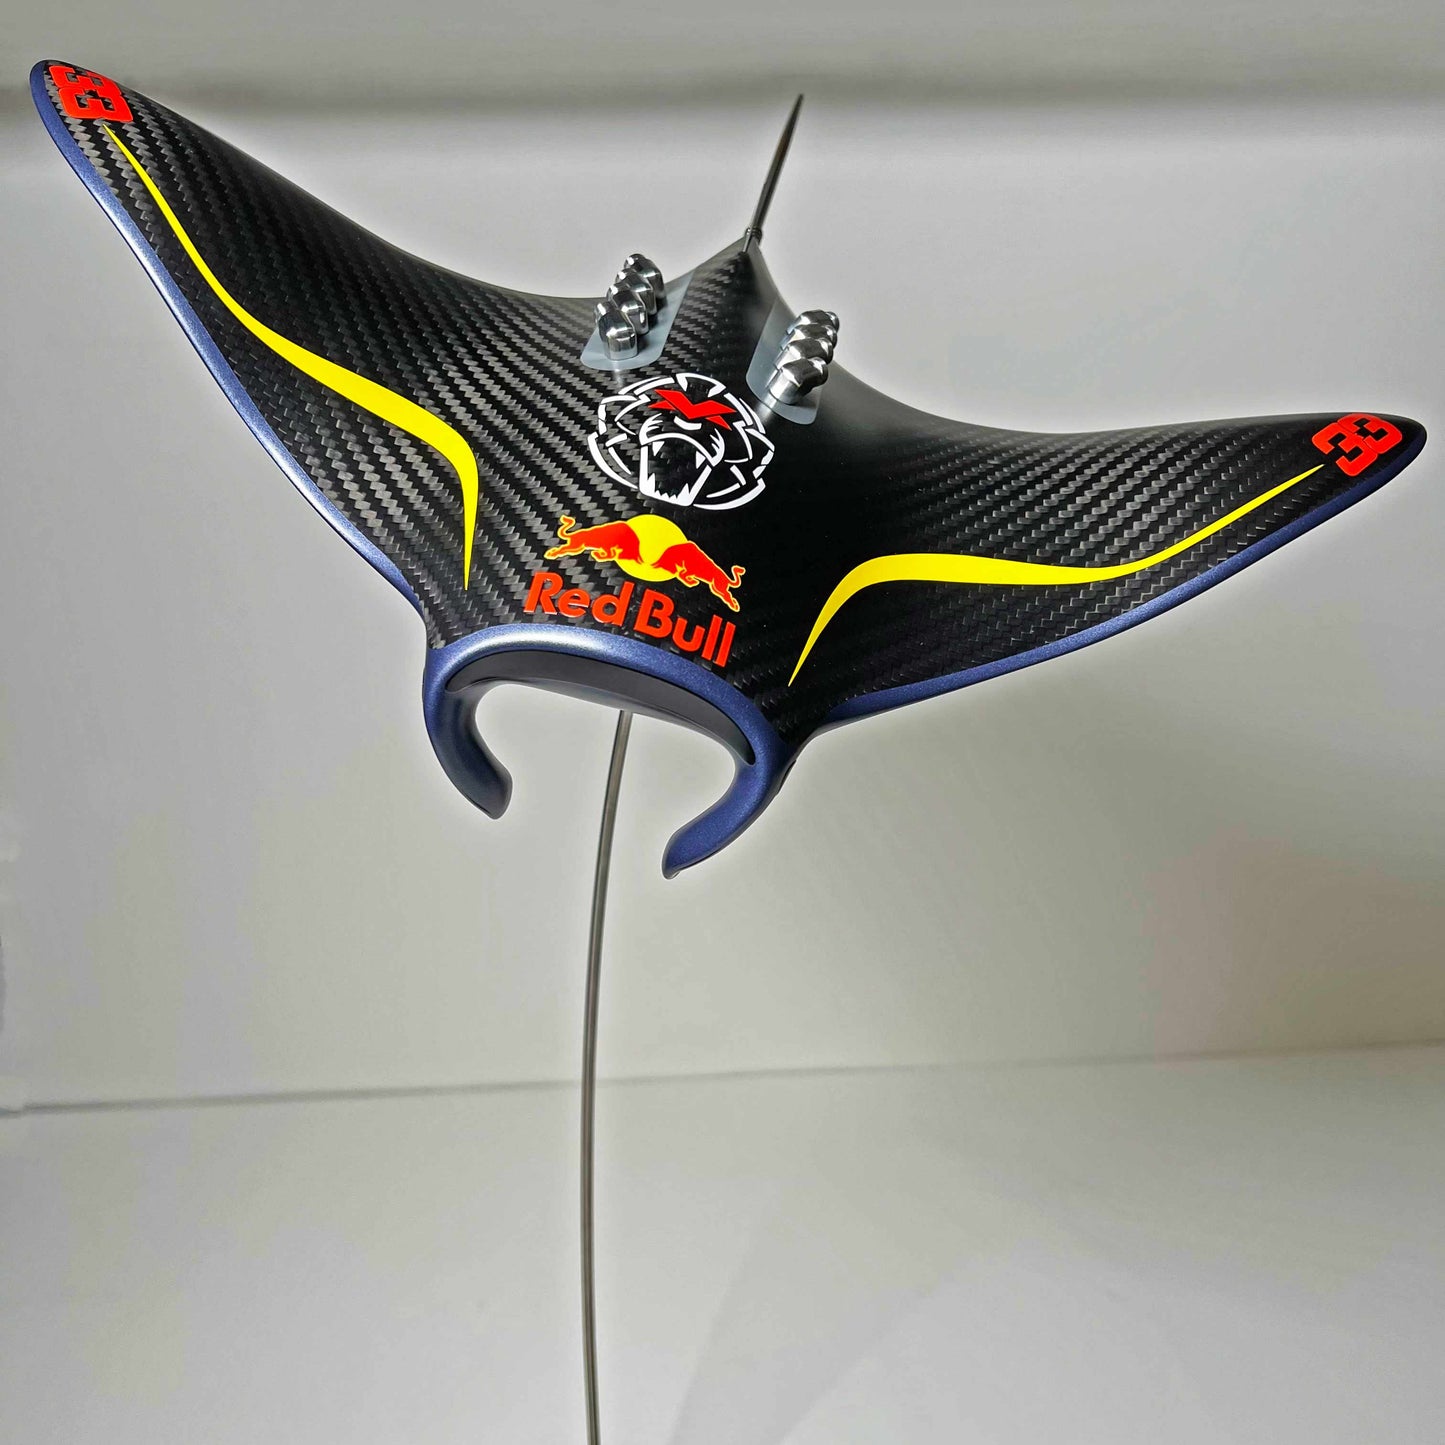 Carbon fibre manta ray sculpture with custom RedBull F1 livery